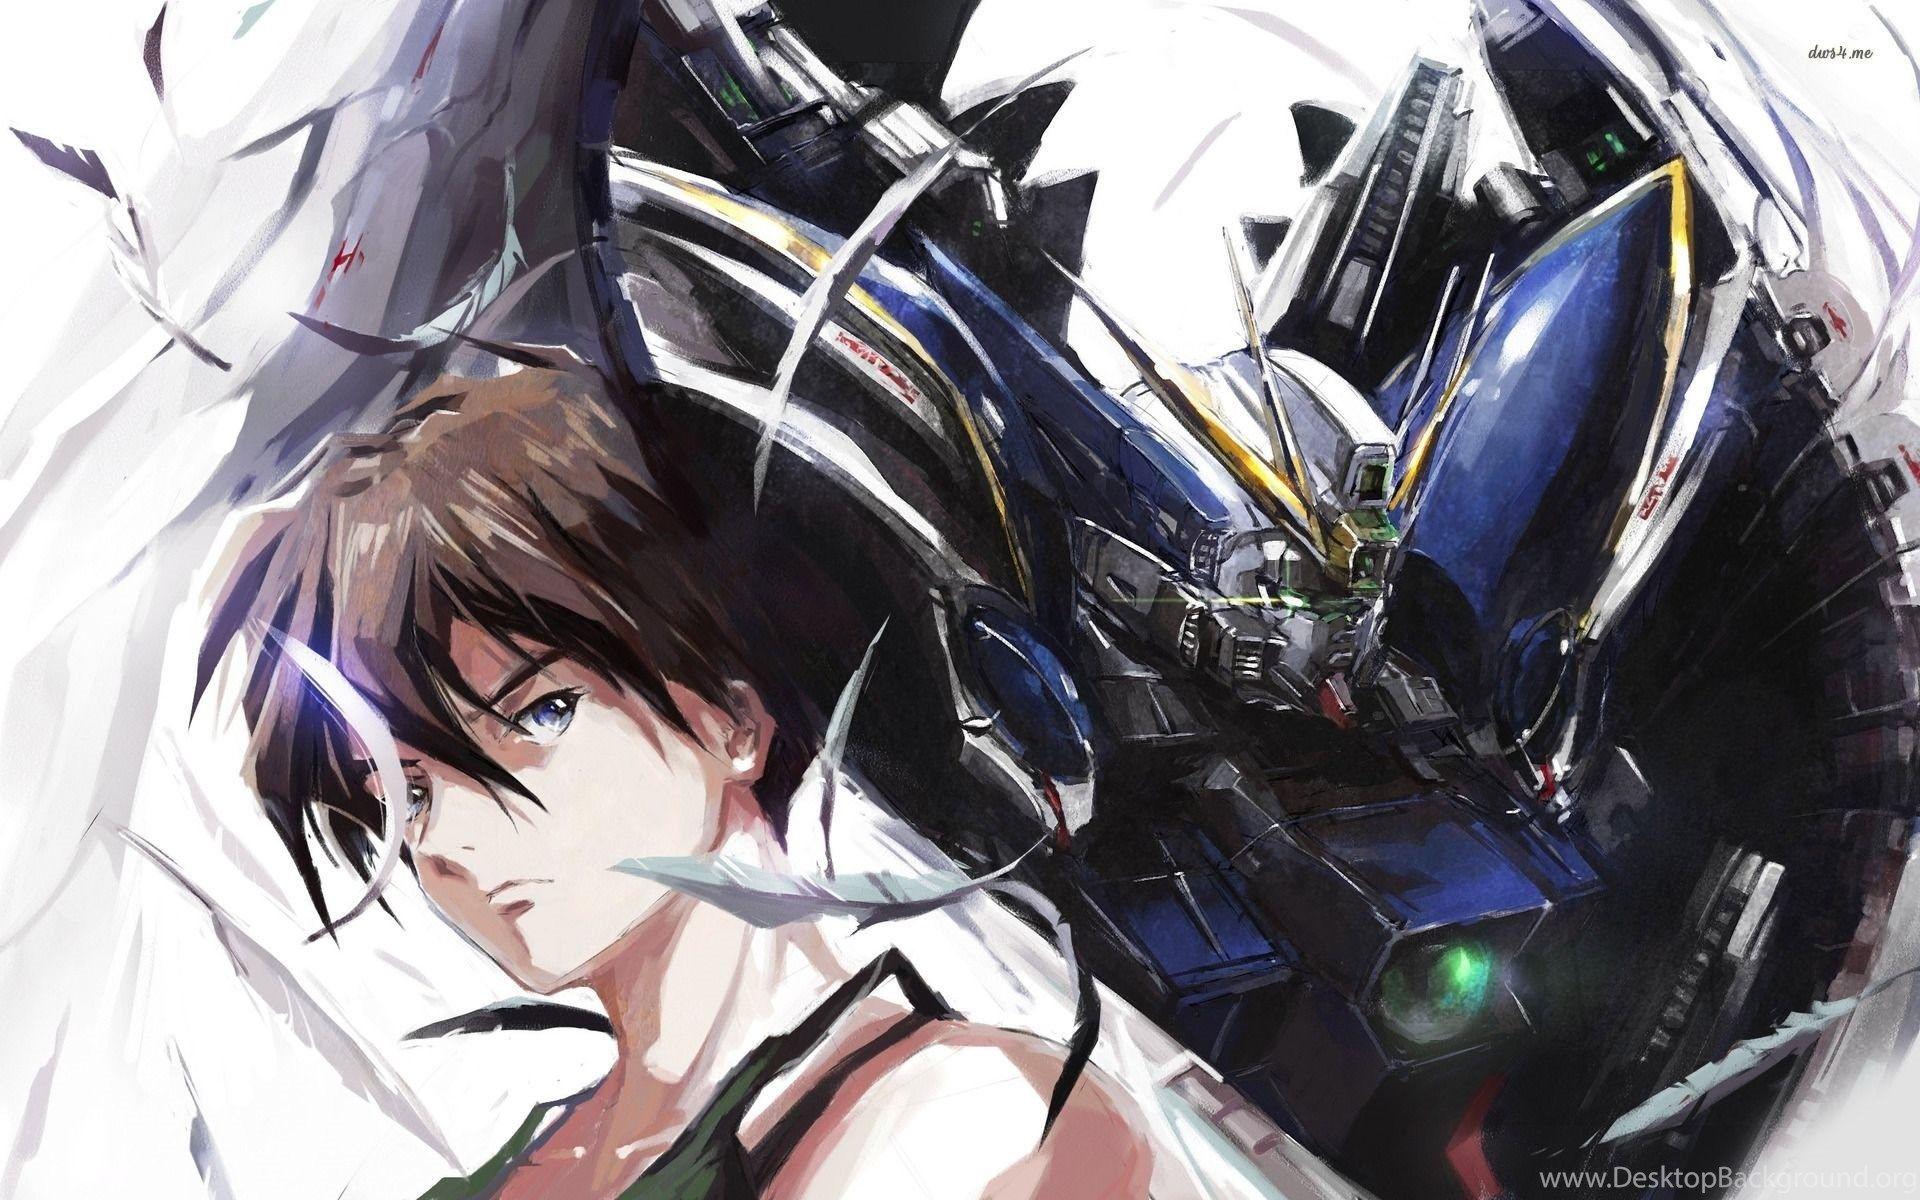 Moblie Suit Gundam Wing Wallpaper Anime Wallpaper Desktop Background